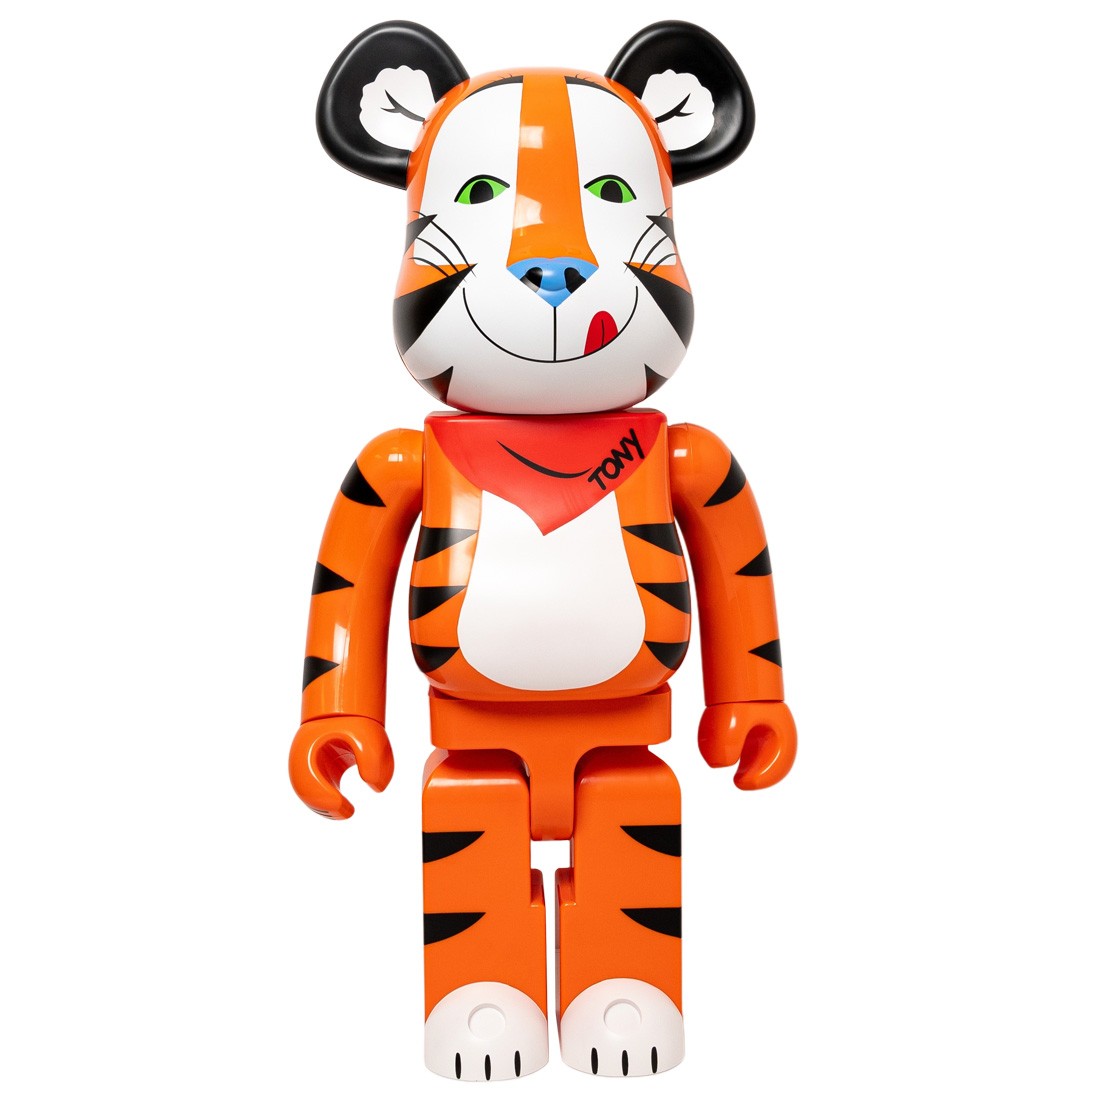 Medicom Kellogg's Tony The Tiger Vintage Ver. 1000% Bearbrick Figure  (orange)